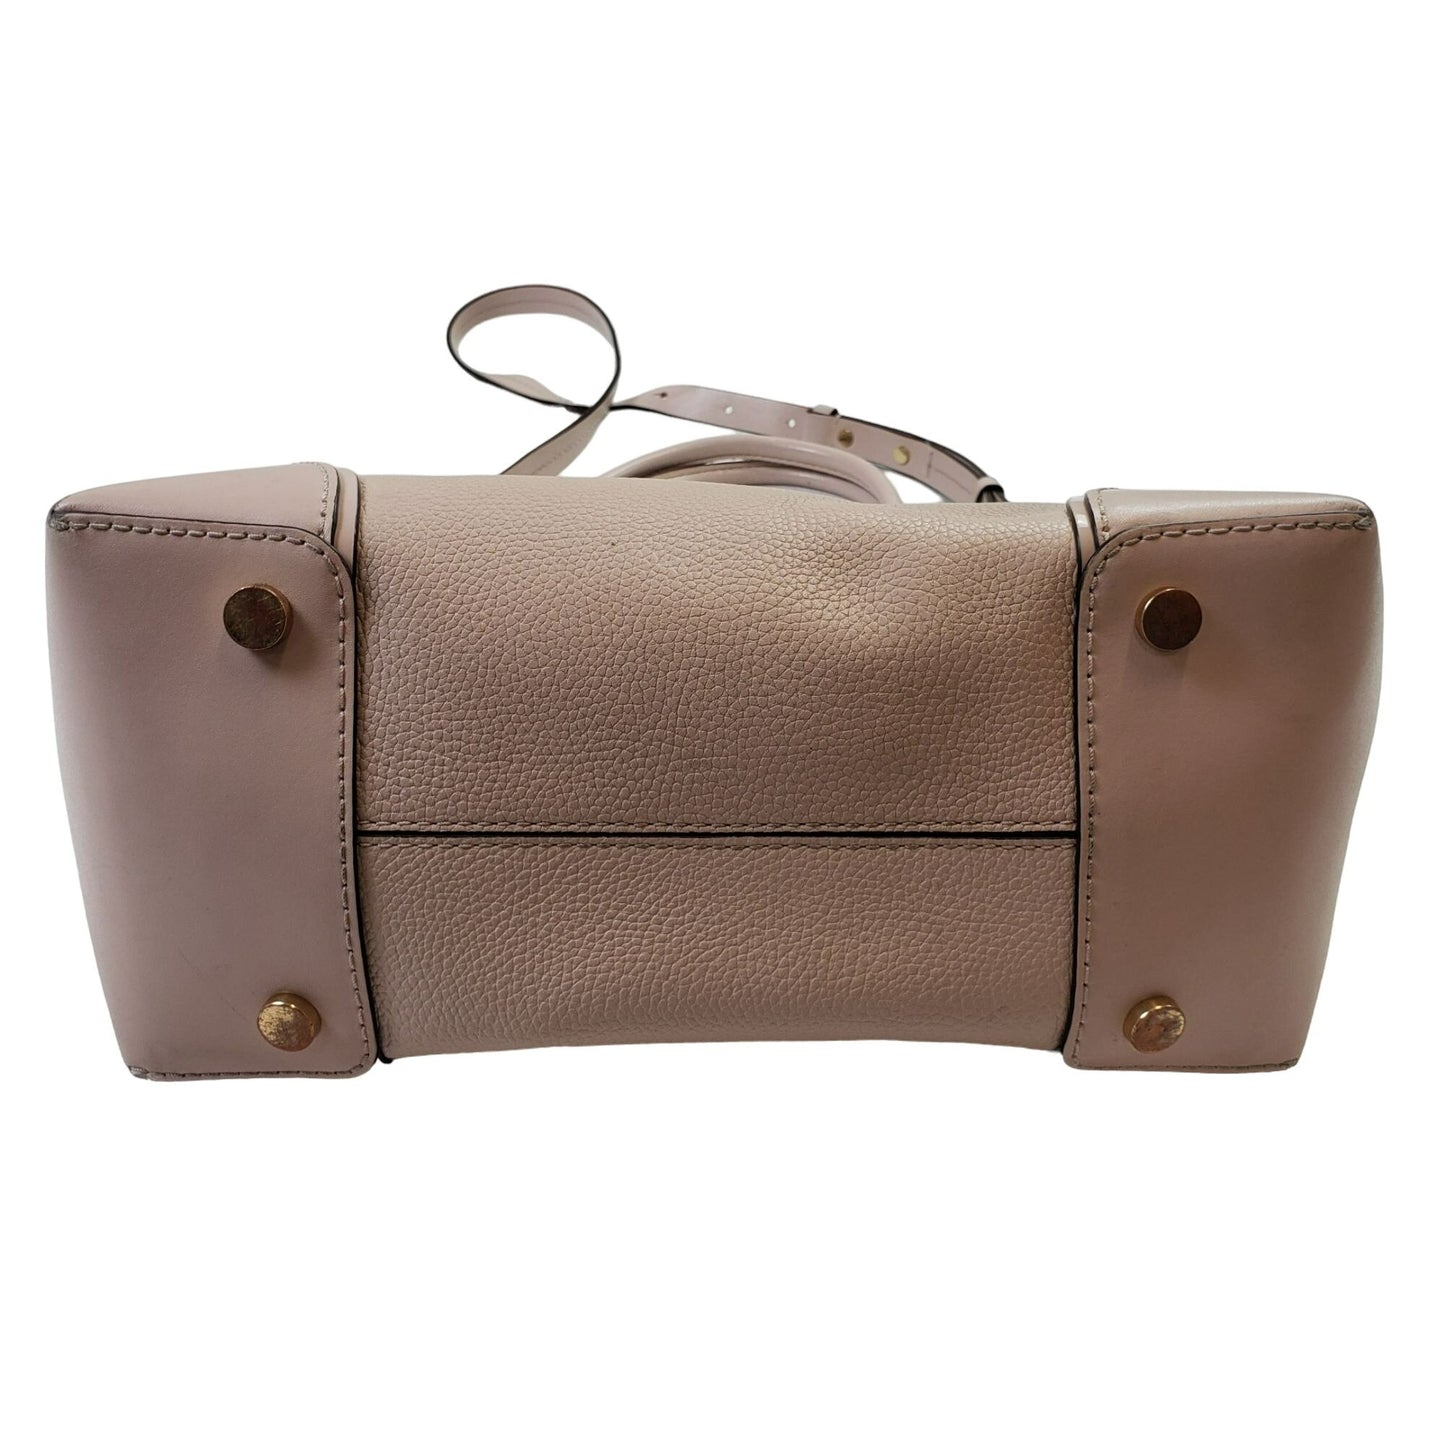 Michael Kors Pebble Leather Convertible Crossbody Handbag